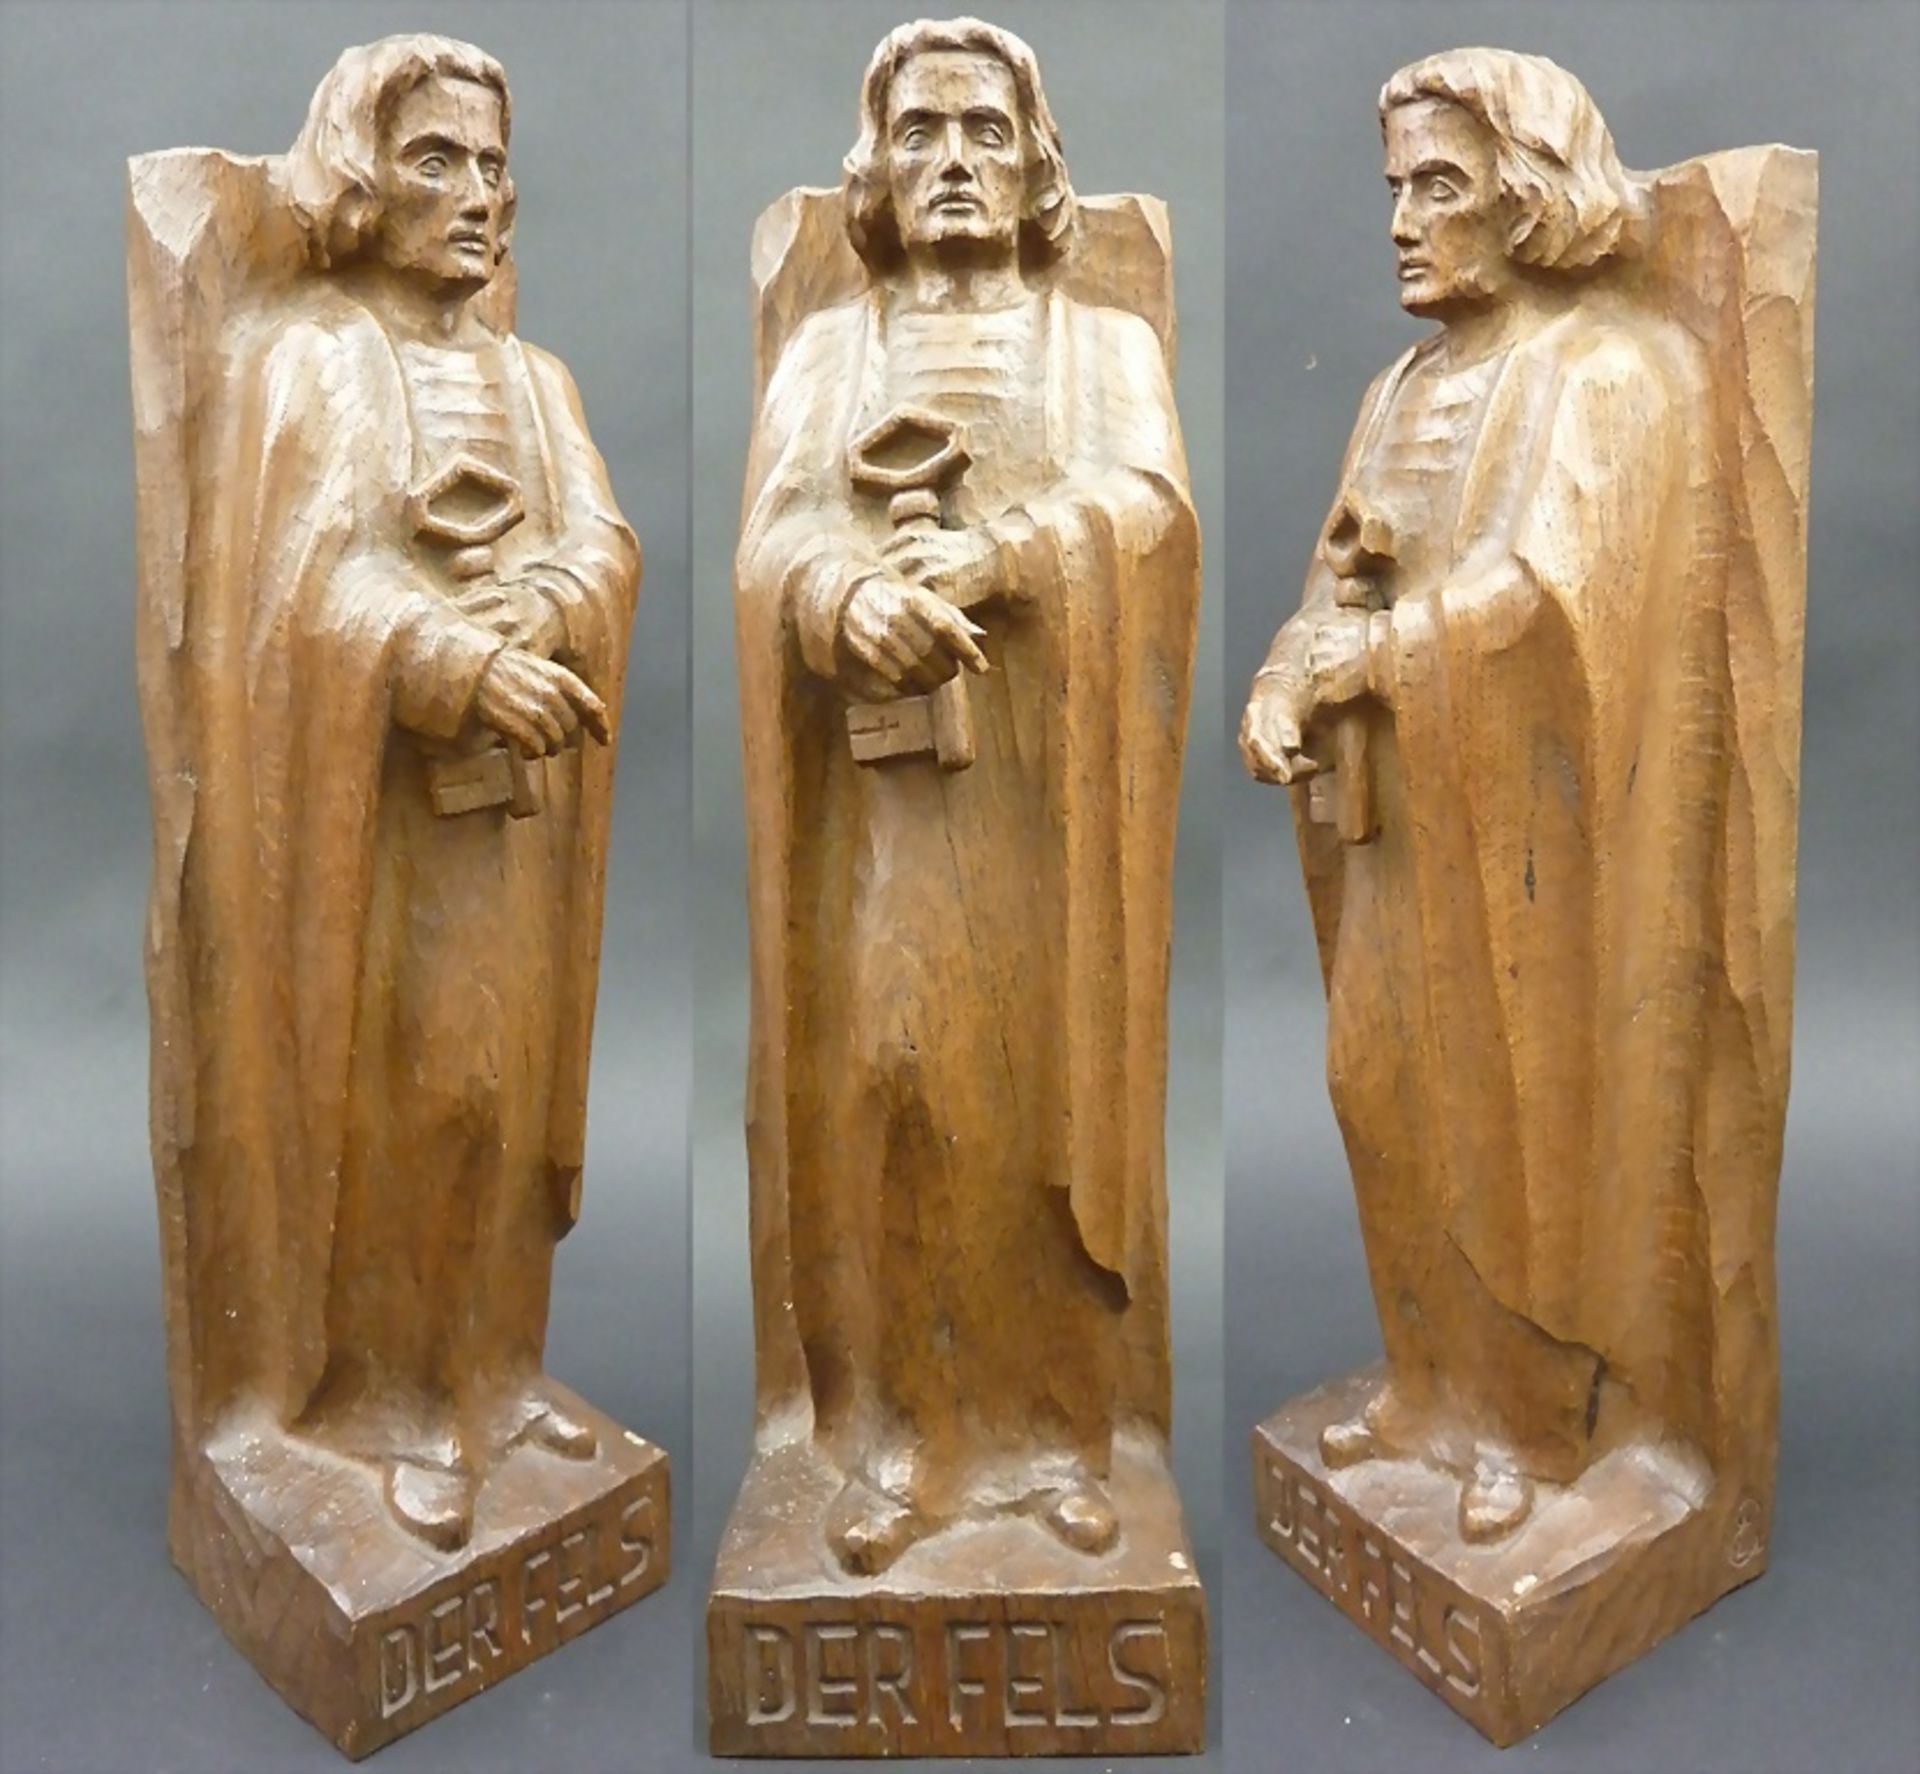 Holz-Skulptur 'Heiliger Apostel Petrus - Der Fels' / Wooden sculpture 'Holy Apostle Peter - ...